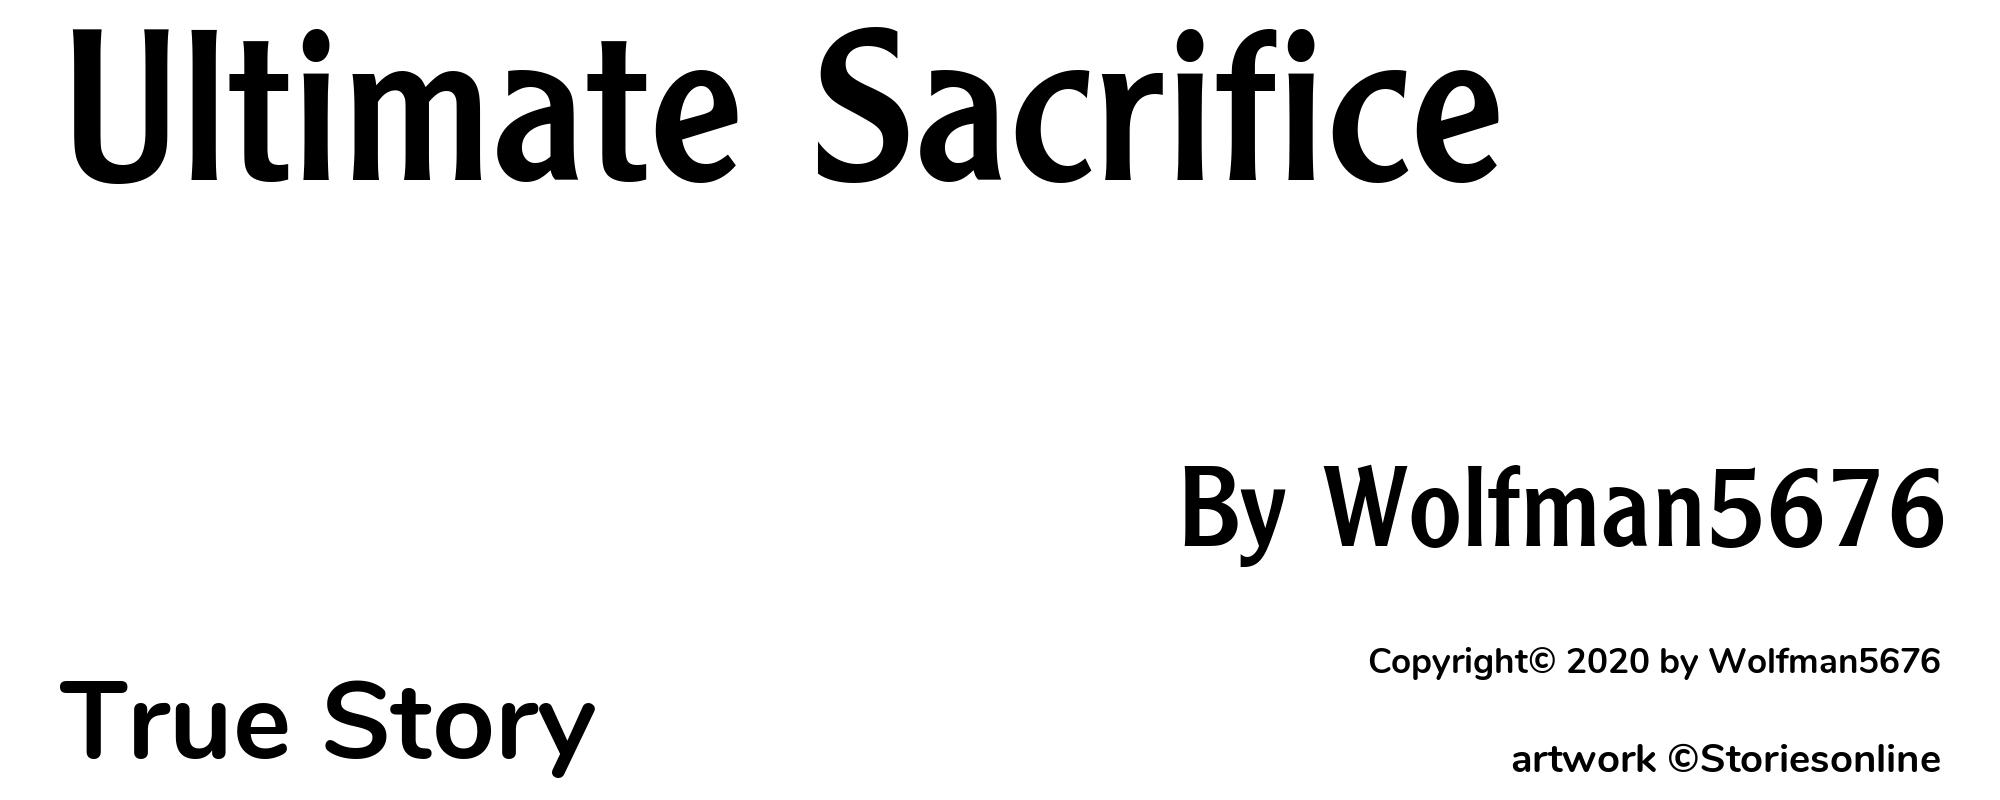 Ultimate Sacrifice - Cover